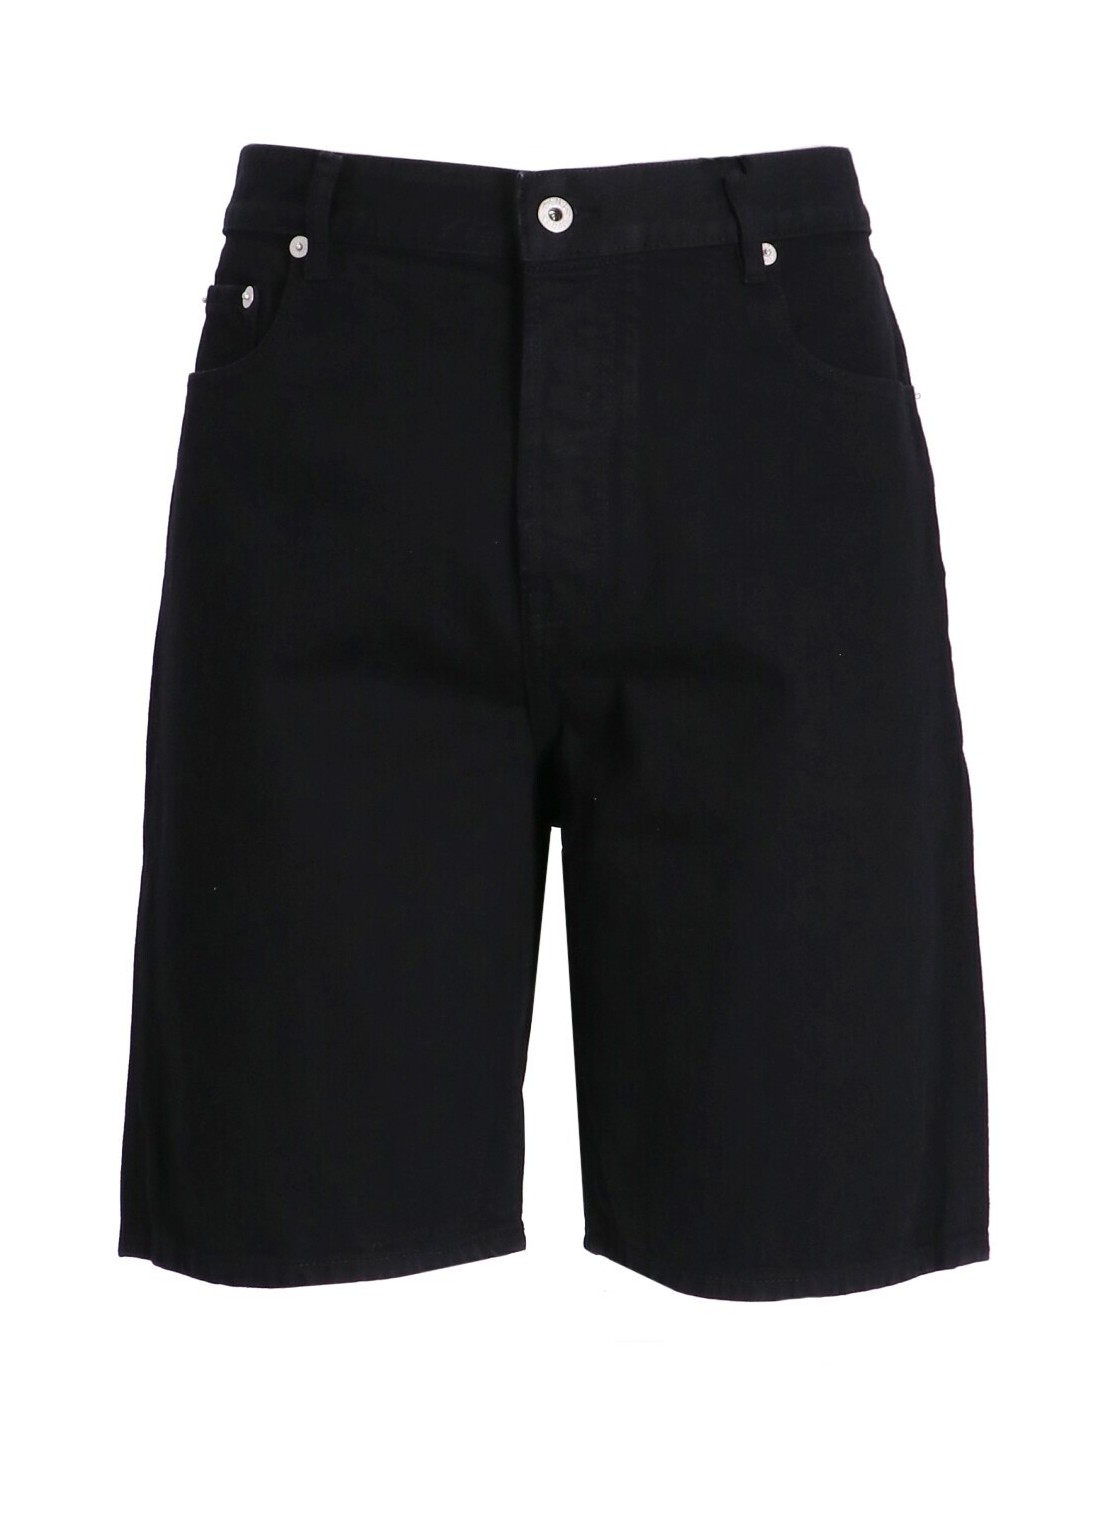 Pantalon corto kenzo short pant man rinse himawari straight short fd65ds3366c1 bm talla negro
 